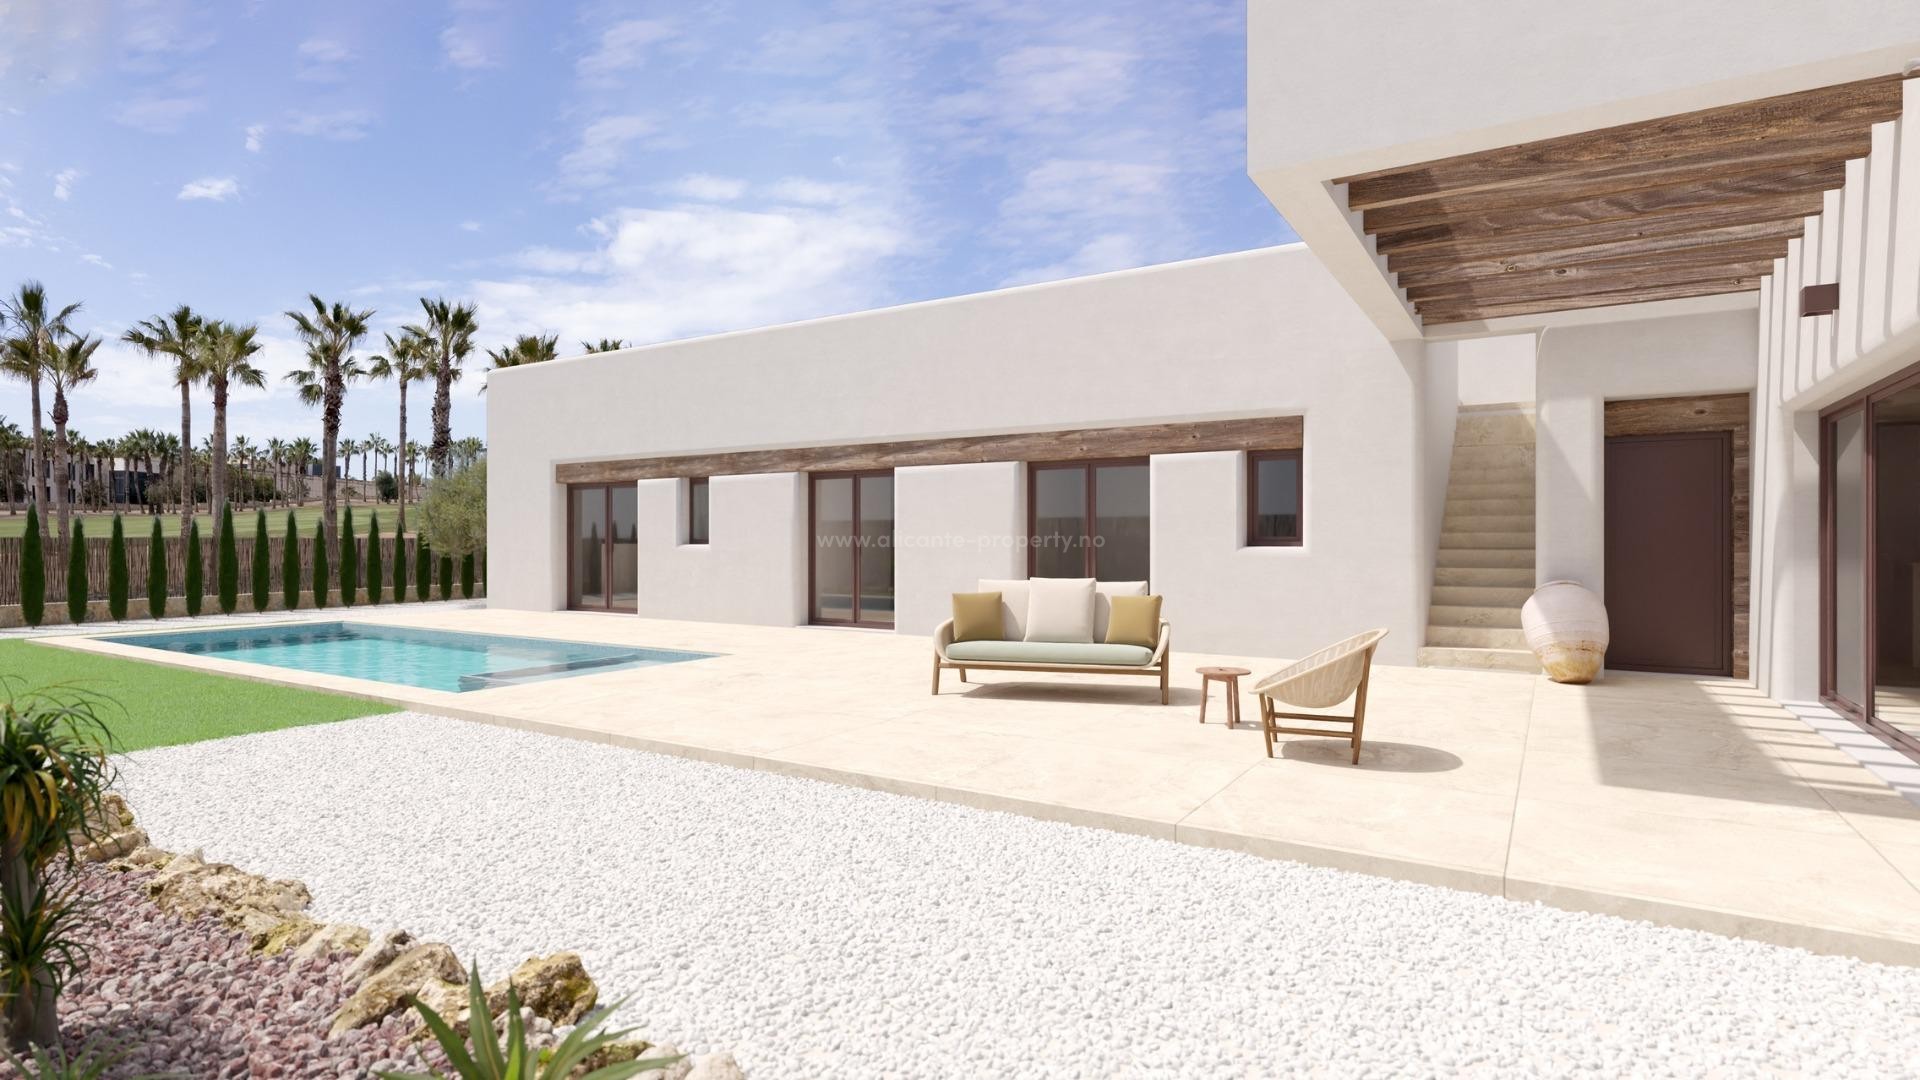 Brand new luxury villas/houses in La Finca Golf, 3 bedrooms, 2 bathrooms, private pool and large outdoor area, indoor parking